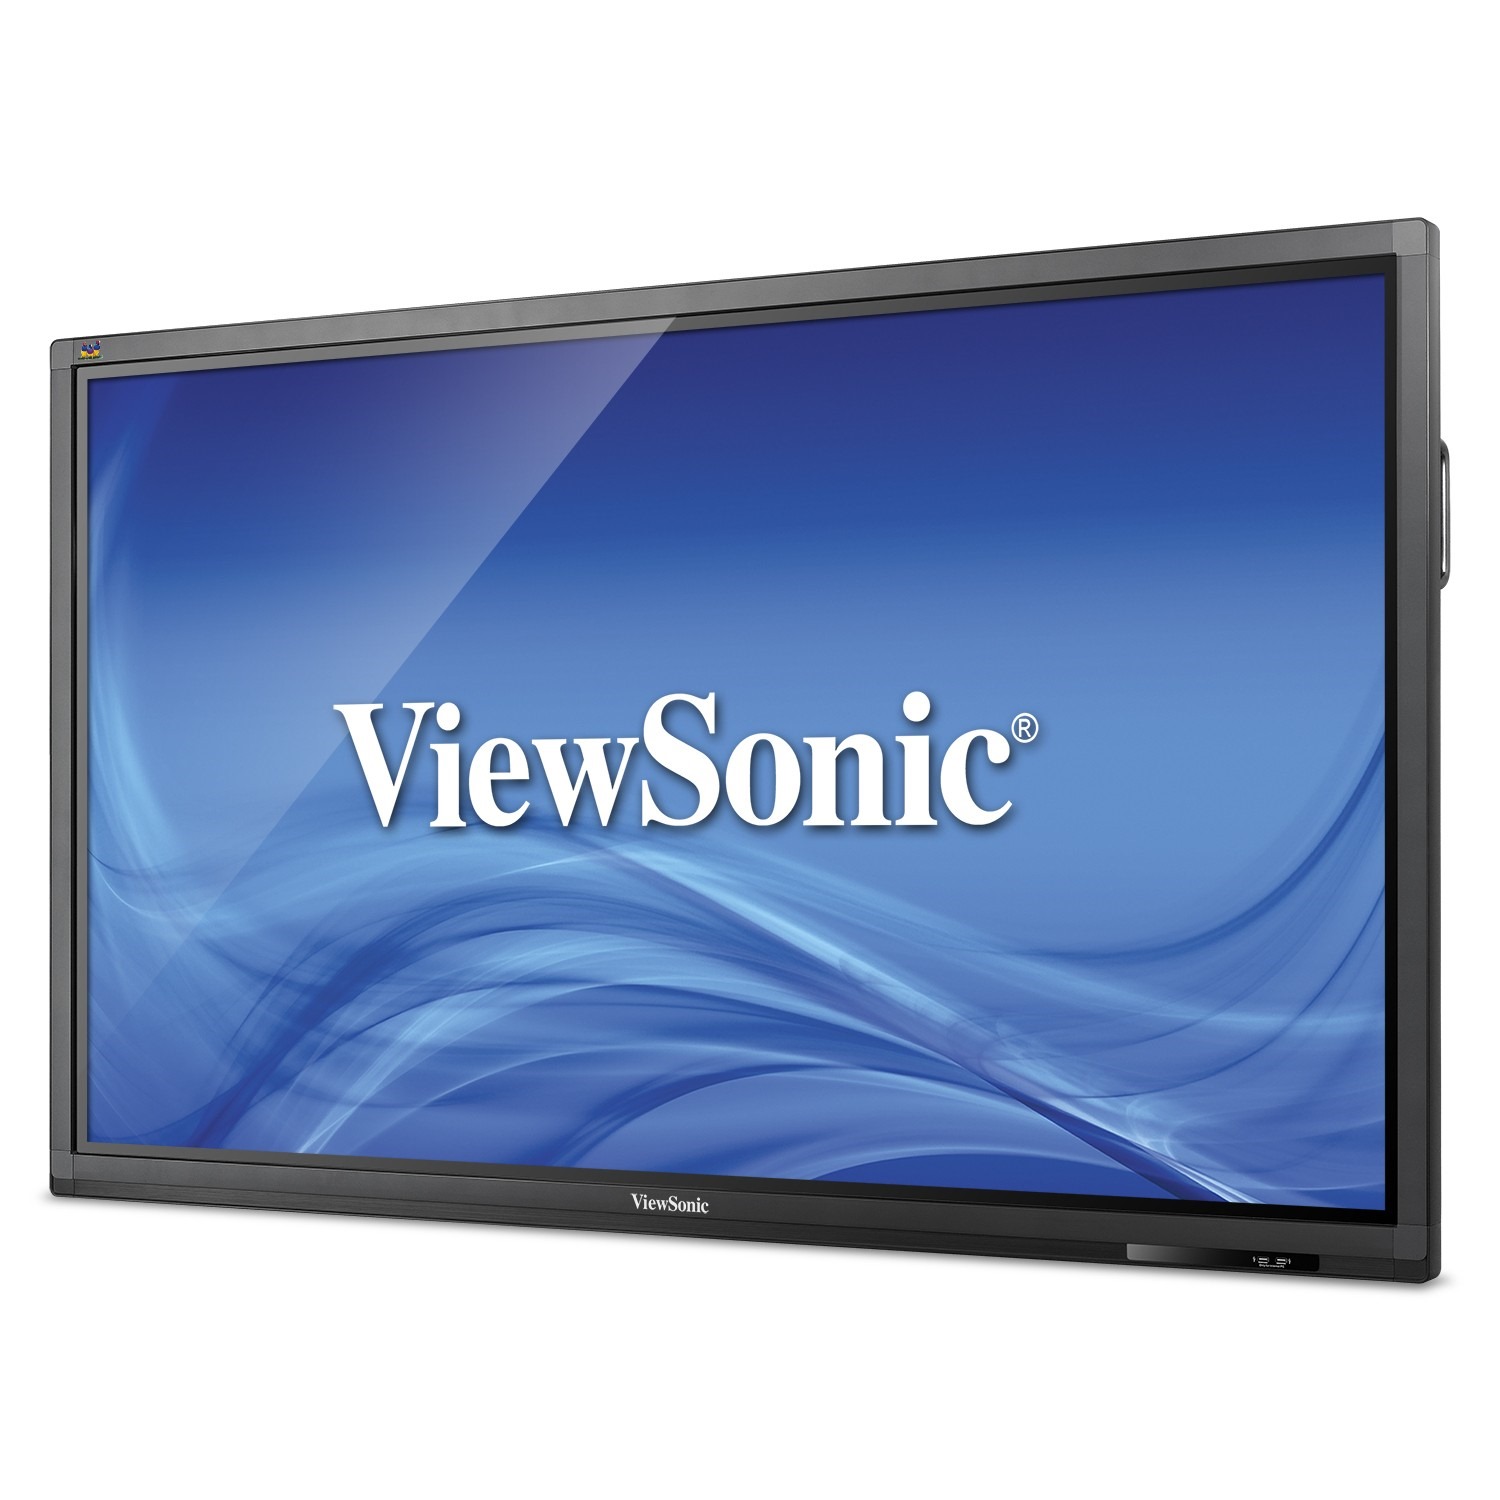 ViewSonic präsentiert das 84-Zoll UHD Display CDE8451-TL